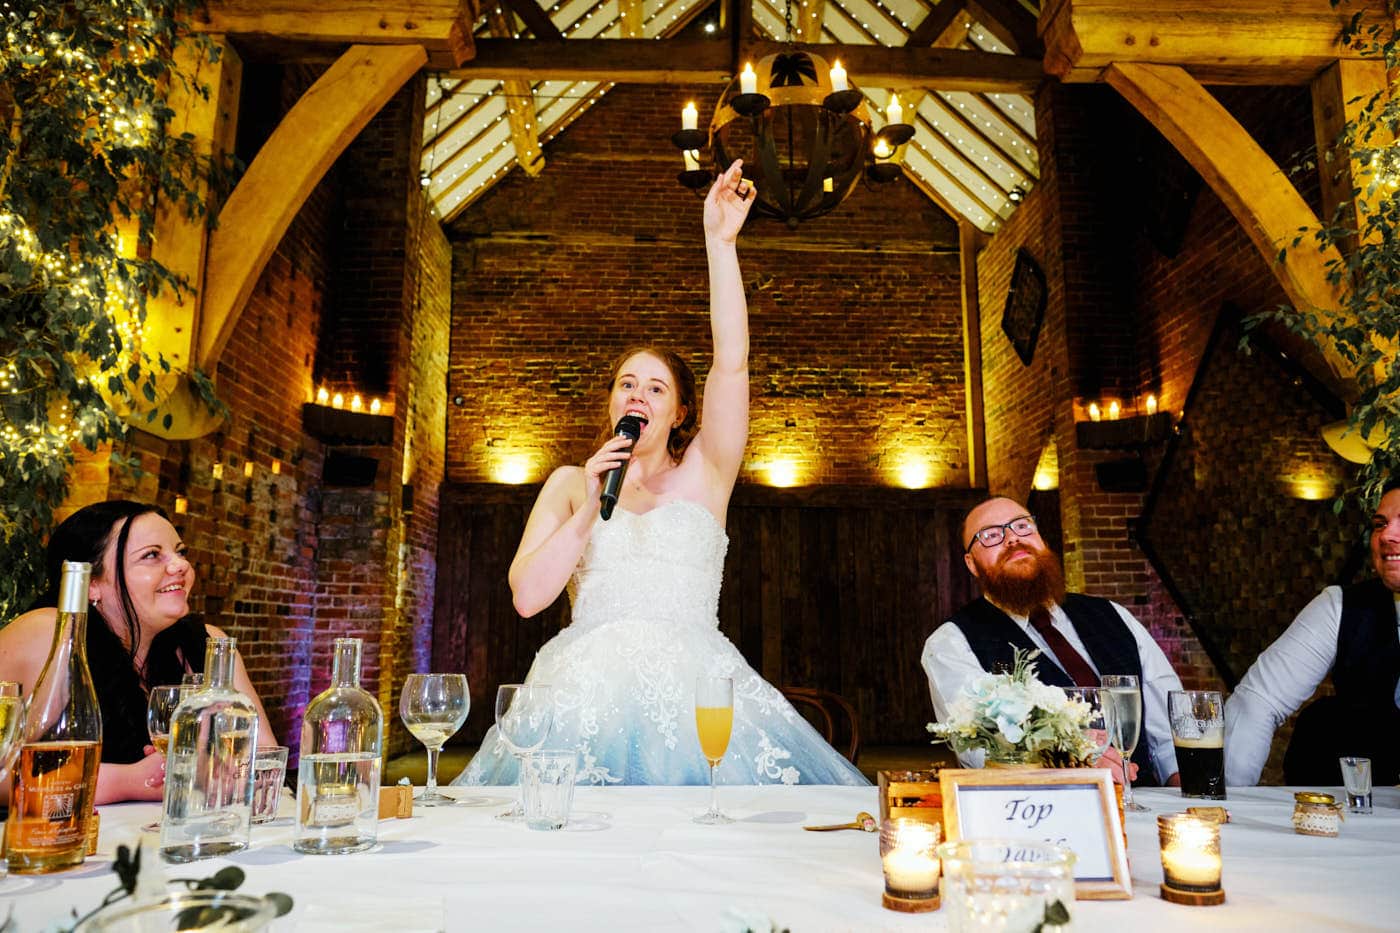 Bride giving a wedding speech at her wedding